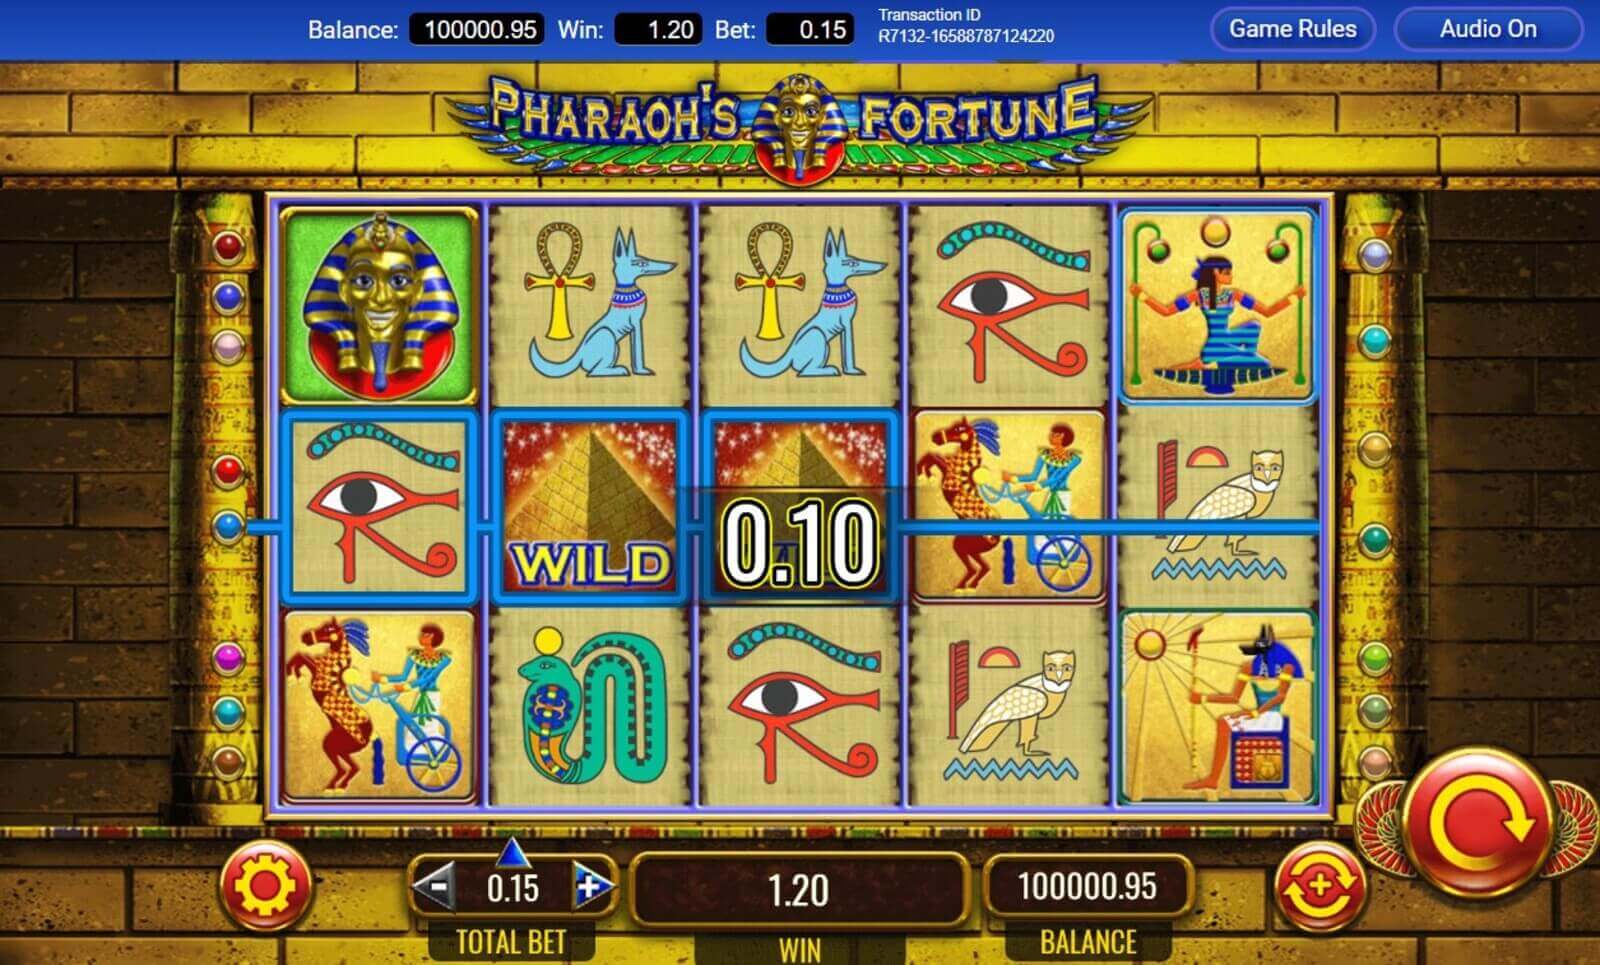 Jugar a la tragamonedas gratis Pharaohs Fortune de IGT en casino online